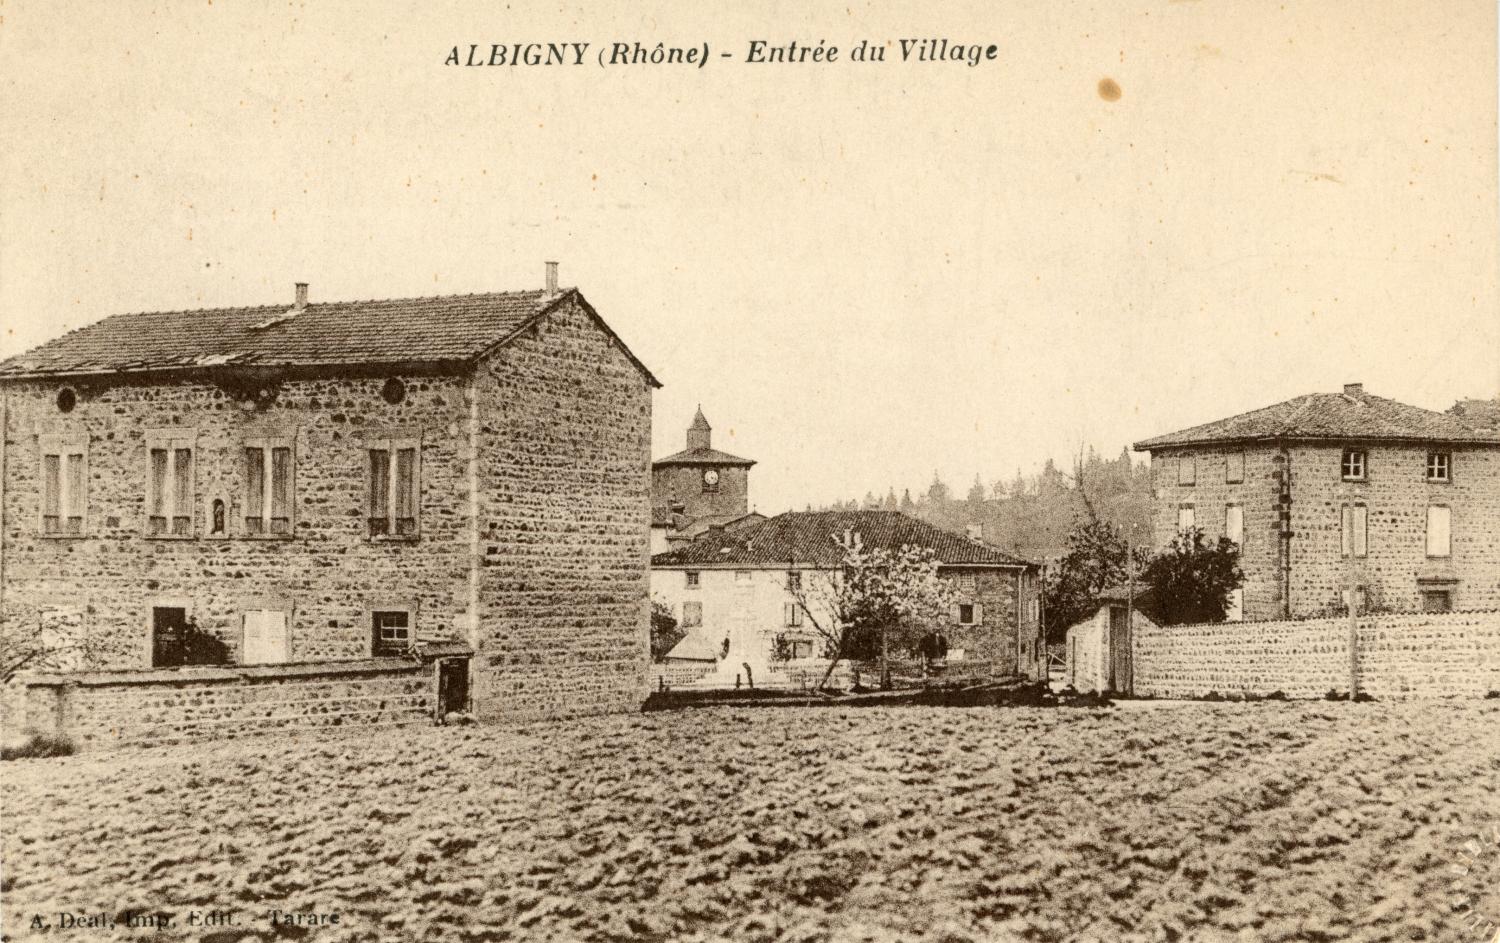 Albigny (Rhône). - Entrée du village